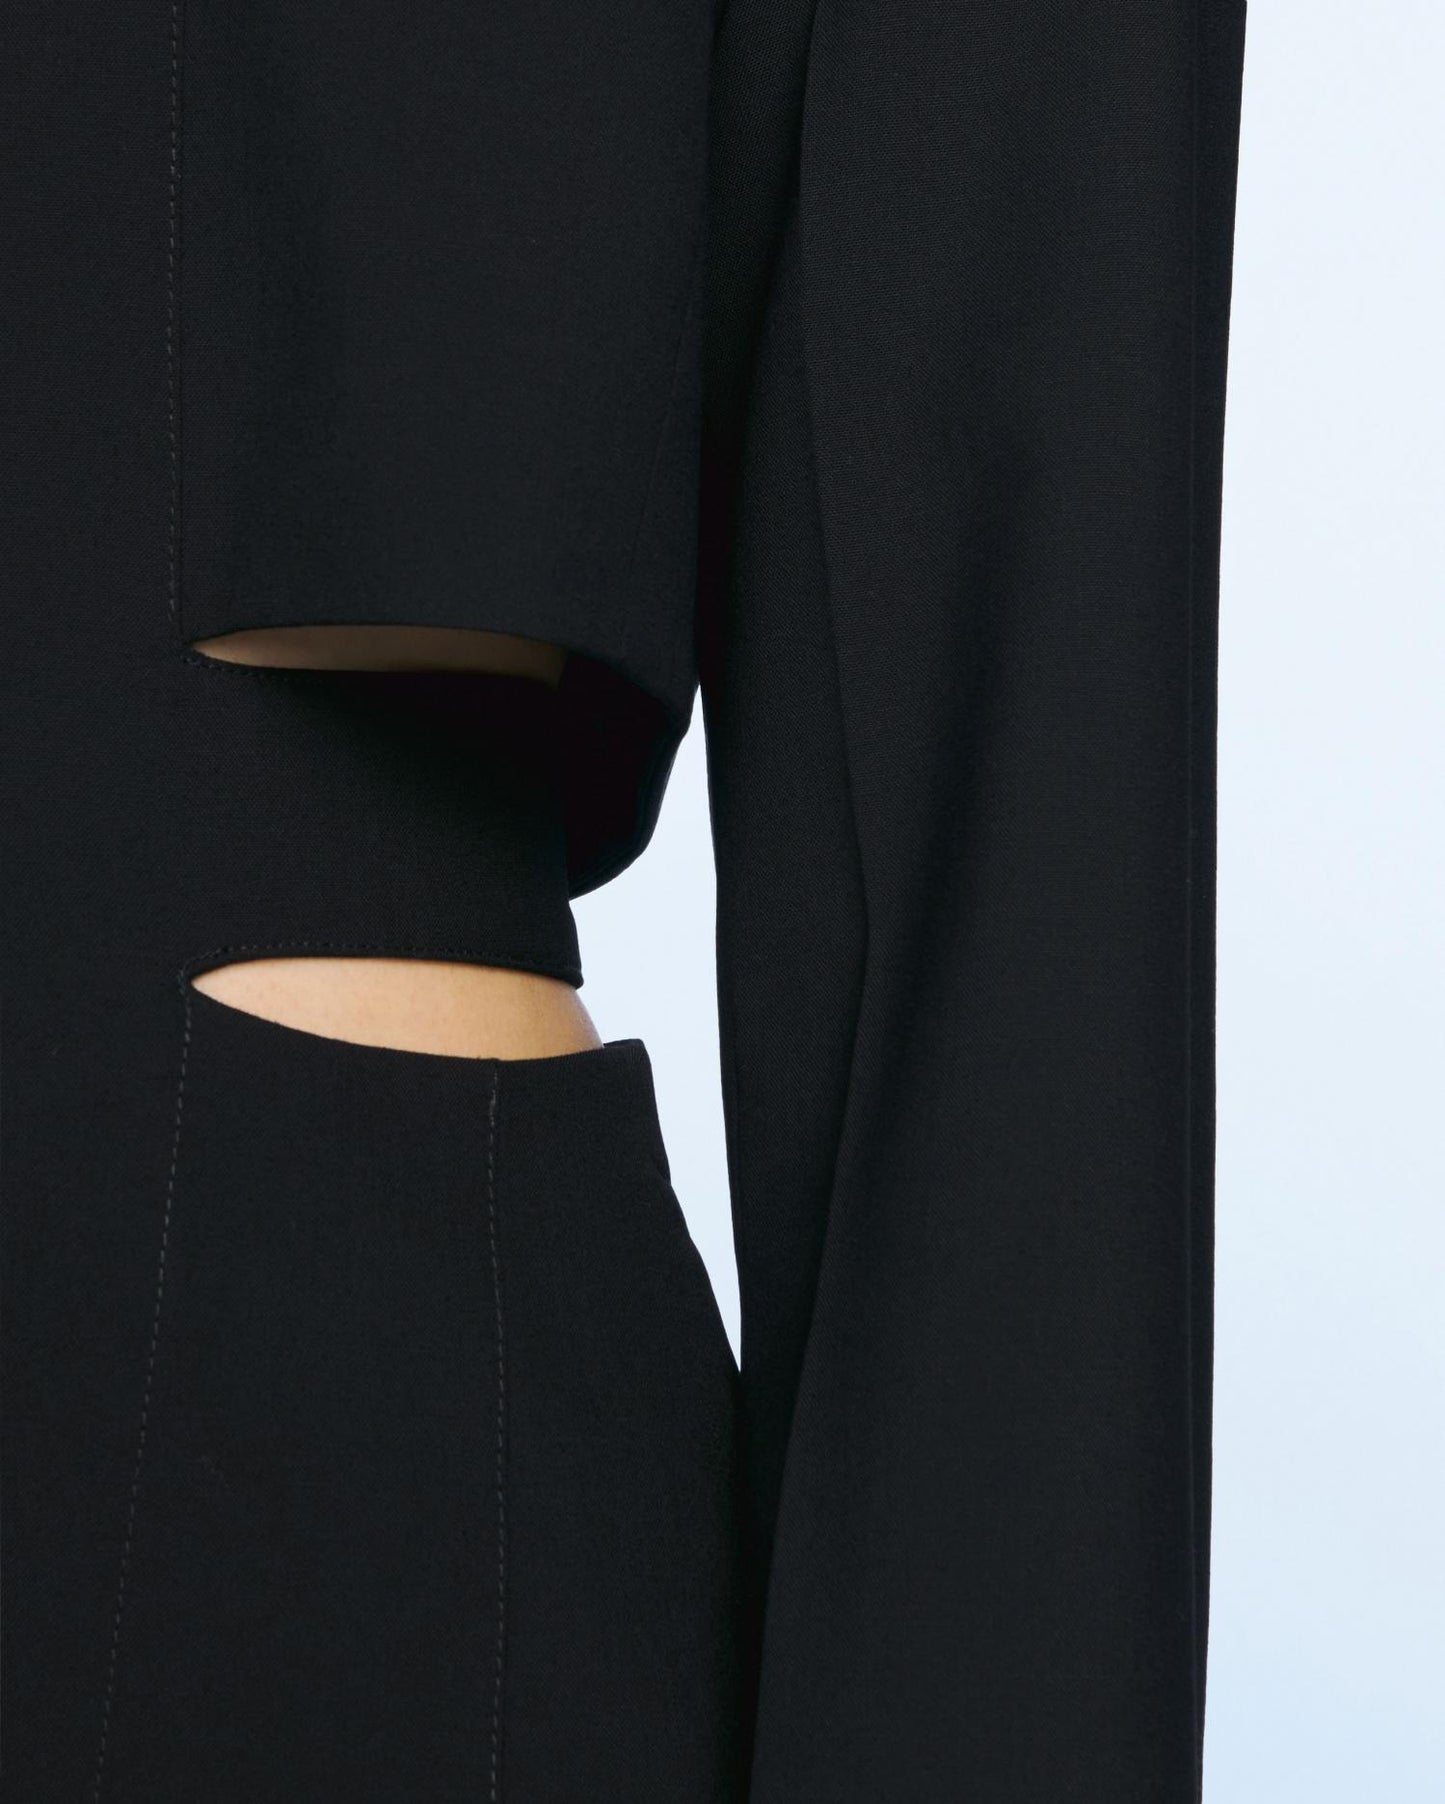 Women's Slim One-button Suit Dress aclosy